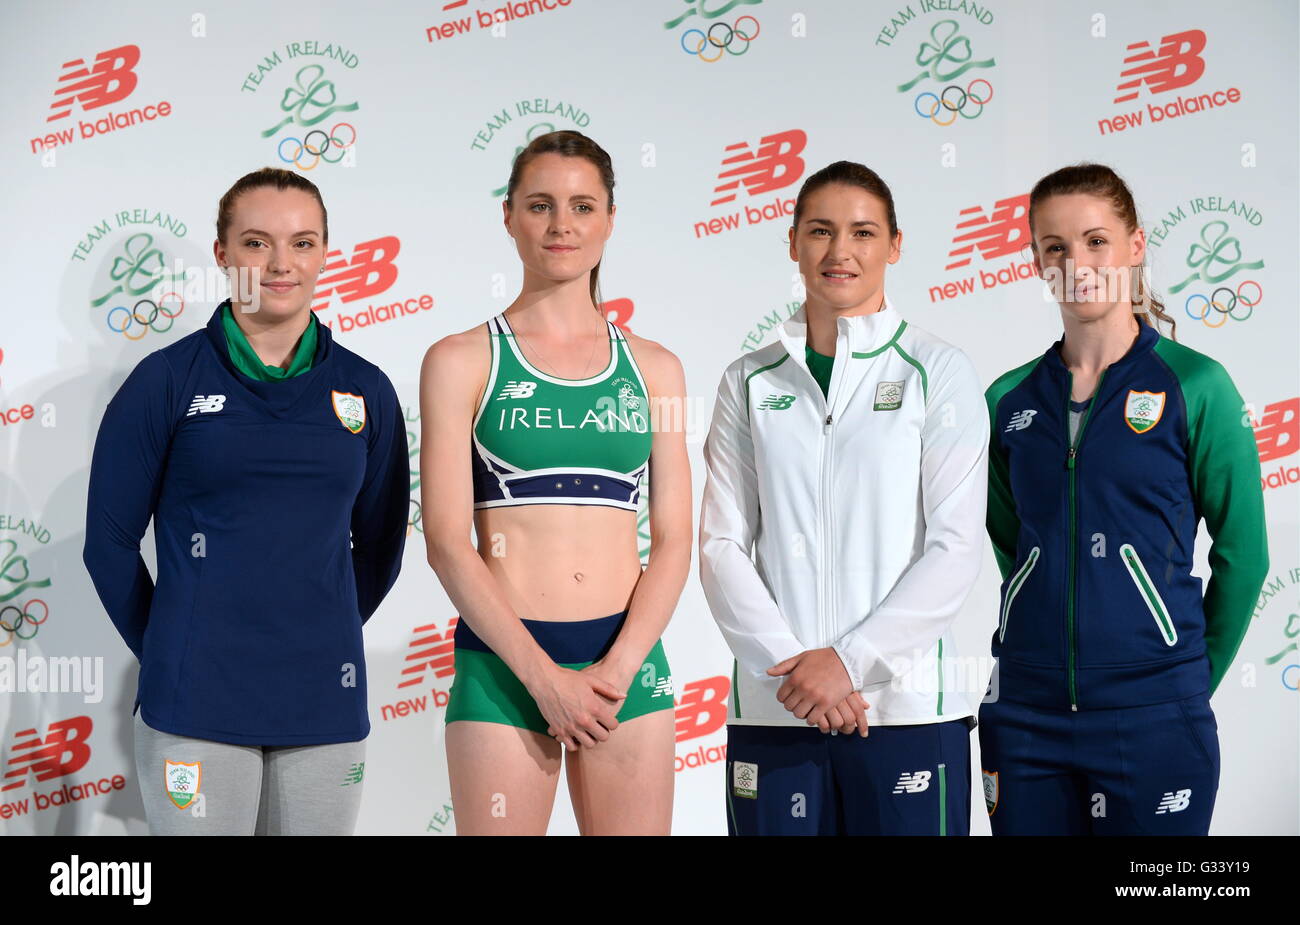 Irlandese team olimpici 2016 membri (sinistra-destra) Ellis O'Reilly, Ciara Mageean, Katie Taylor e Chloe Magee durante il Team Irlanda ufficiale kit 2016 lancio a Smock Alley Theatre, Dublino. Foto Stock